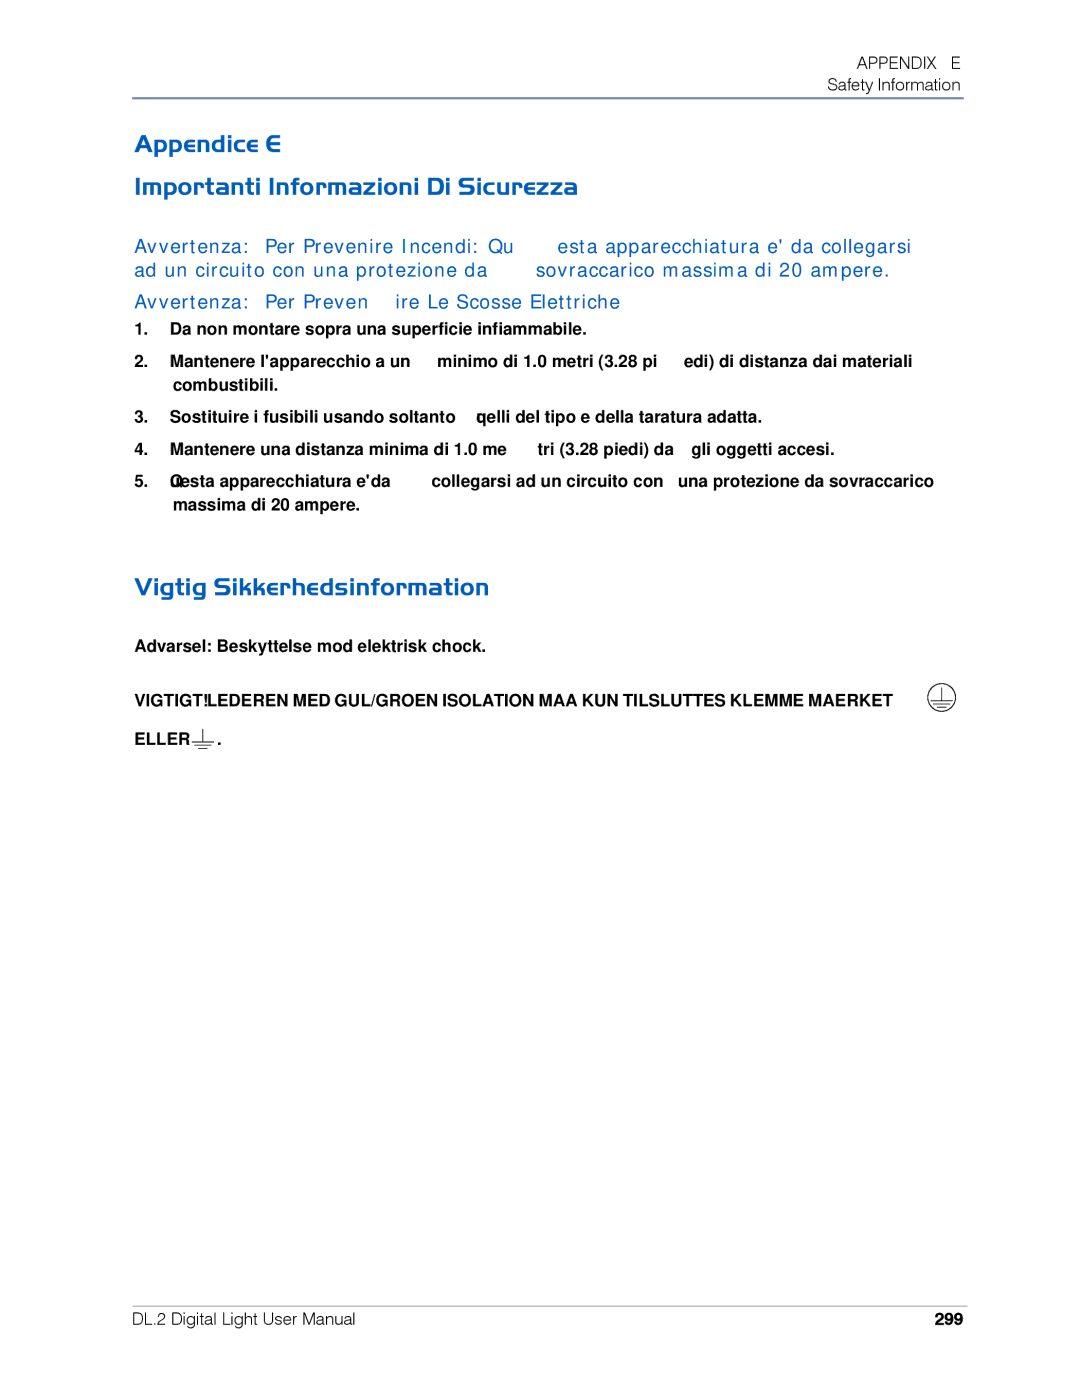 High End Systems DL.2 user manual Appendice E Importanti Informazioni Di Sicurezza, Vigtig Sikkerhedsinformation, 299 